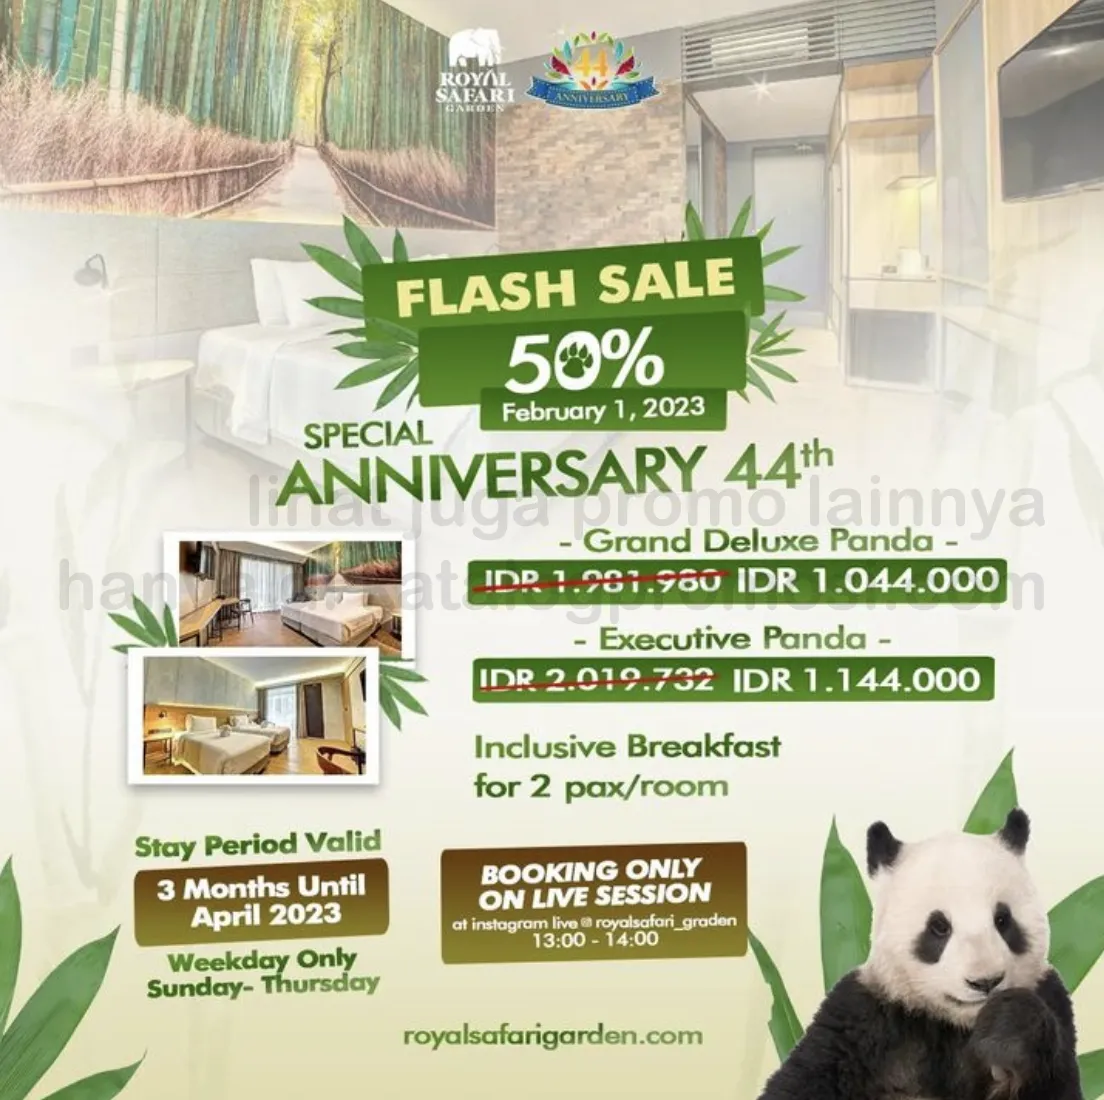 Promo ROYAL SAFARI GARDEN Anniversary 44th - FLASH SALE Discount up to 50% 